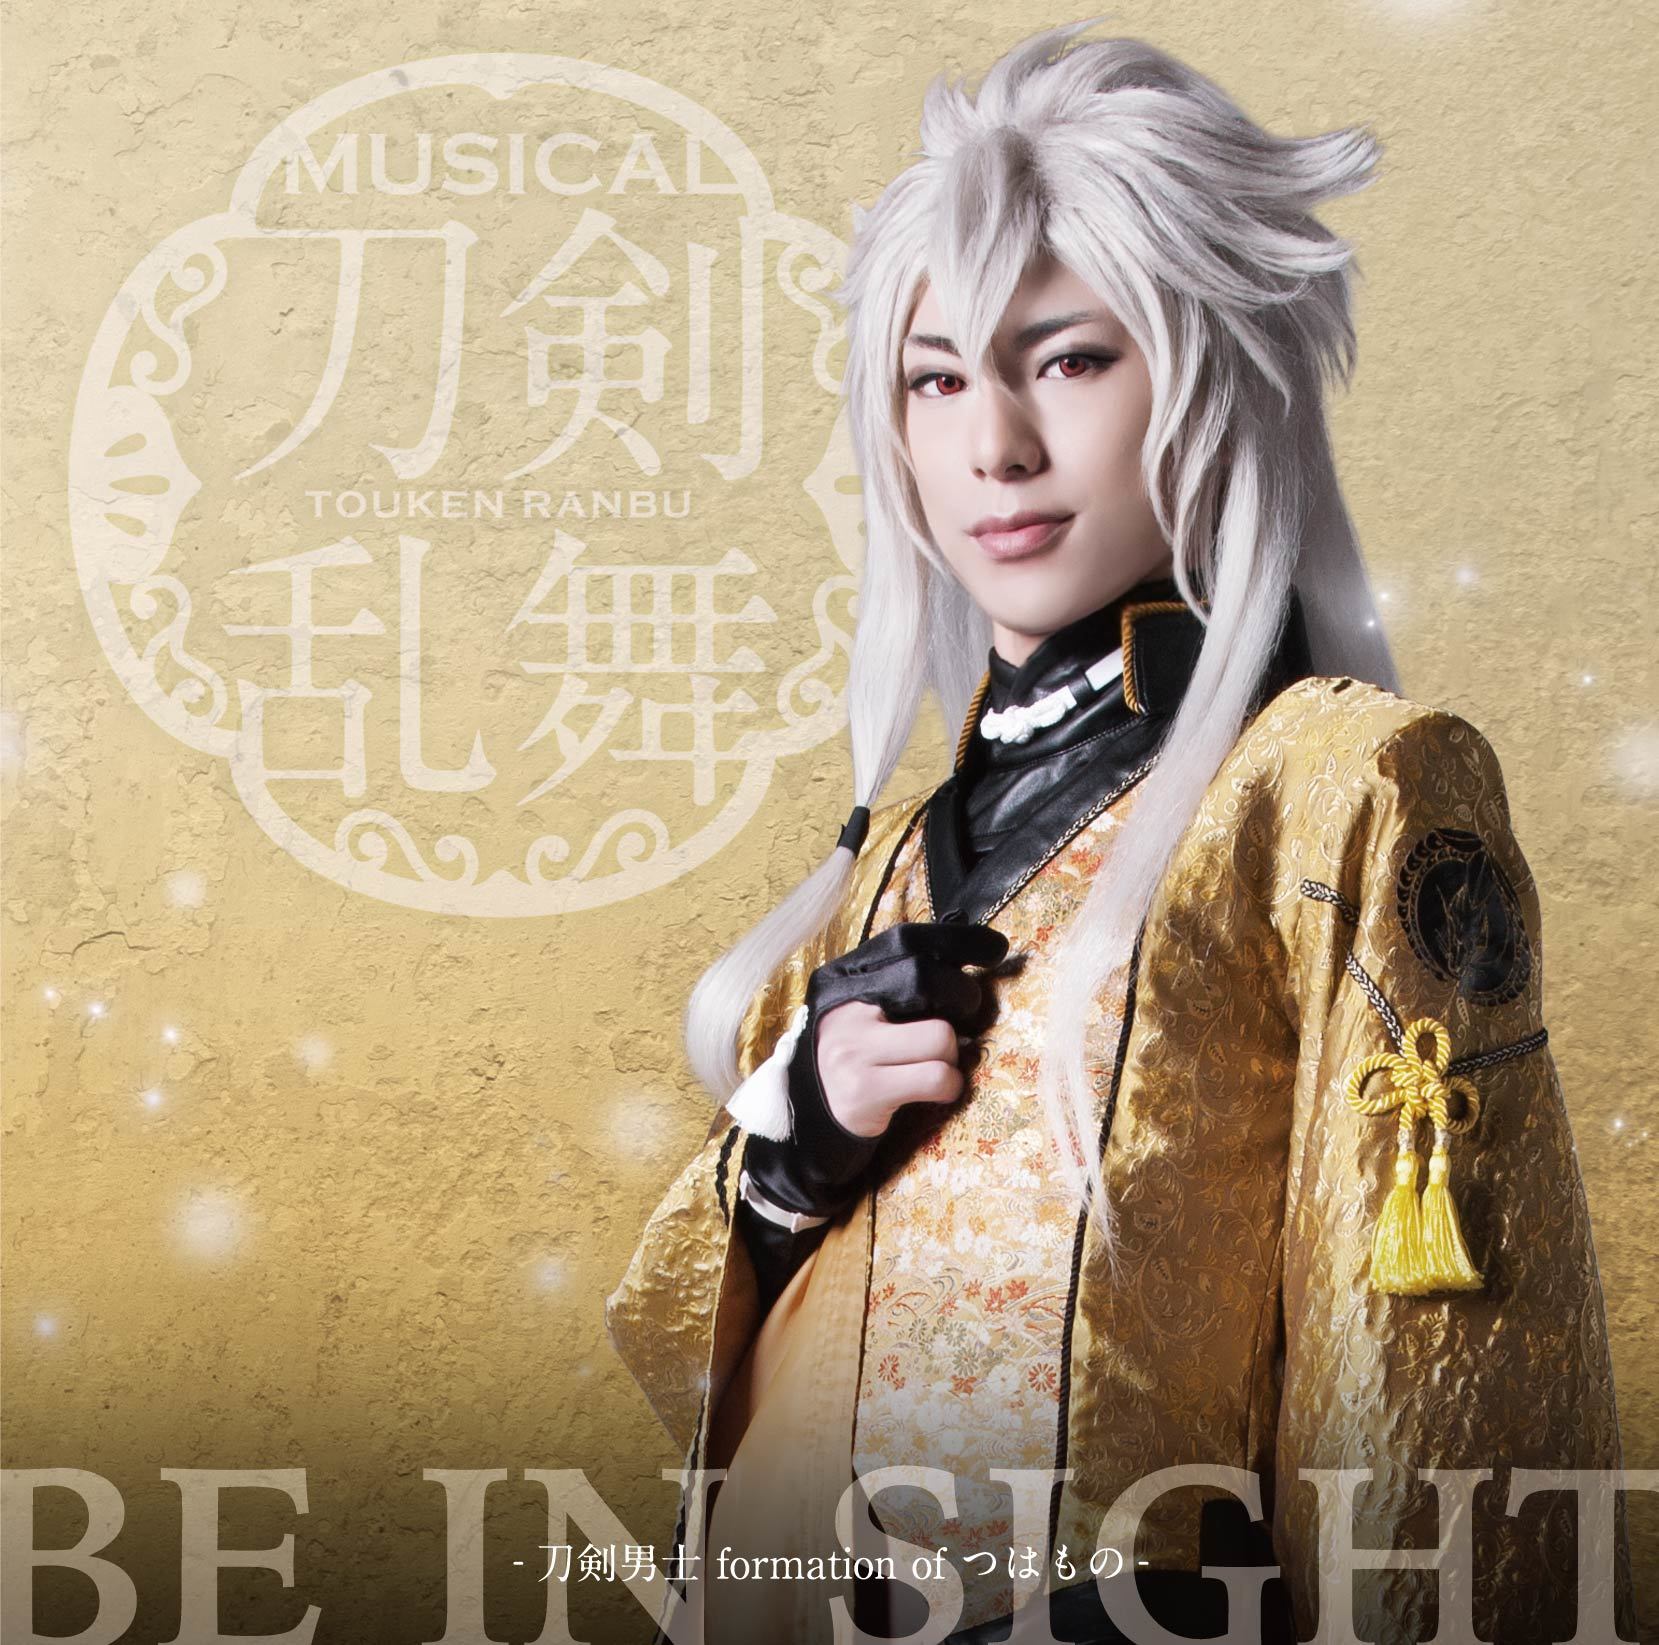 BE IN SIGHT (予約限定盤B) ＊小狐丸メインジャケット ミュージカル『刀剣乱舞』